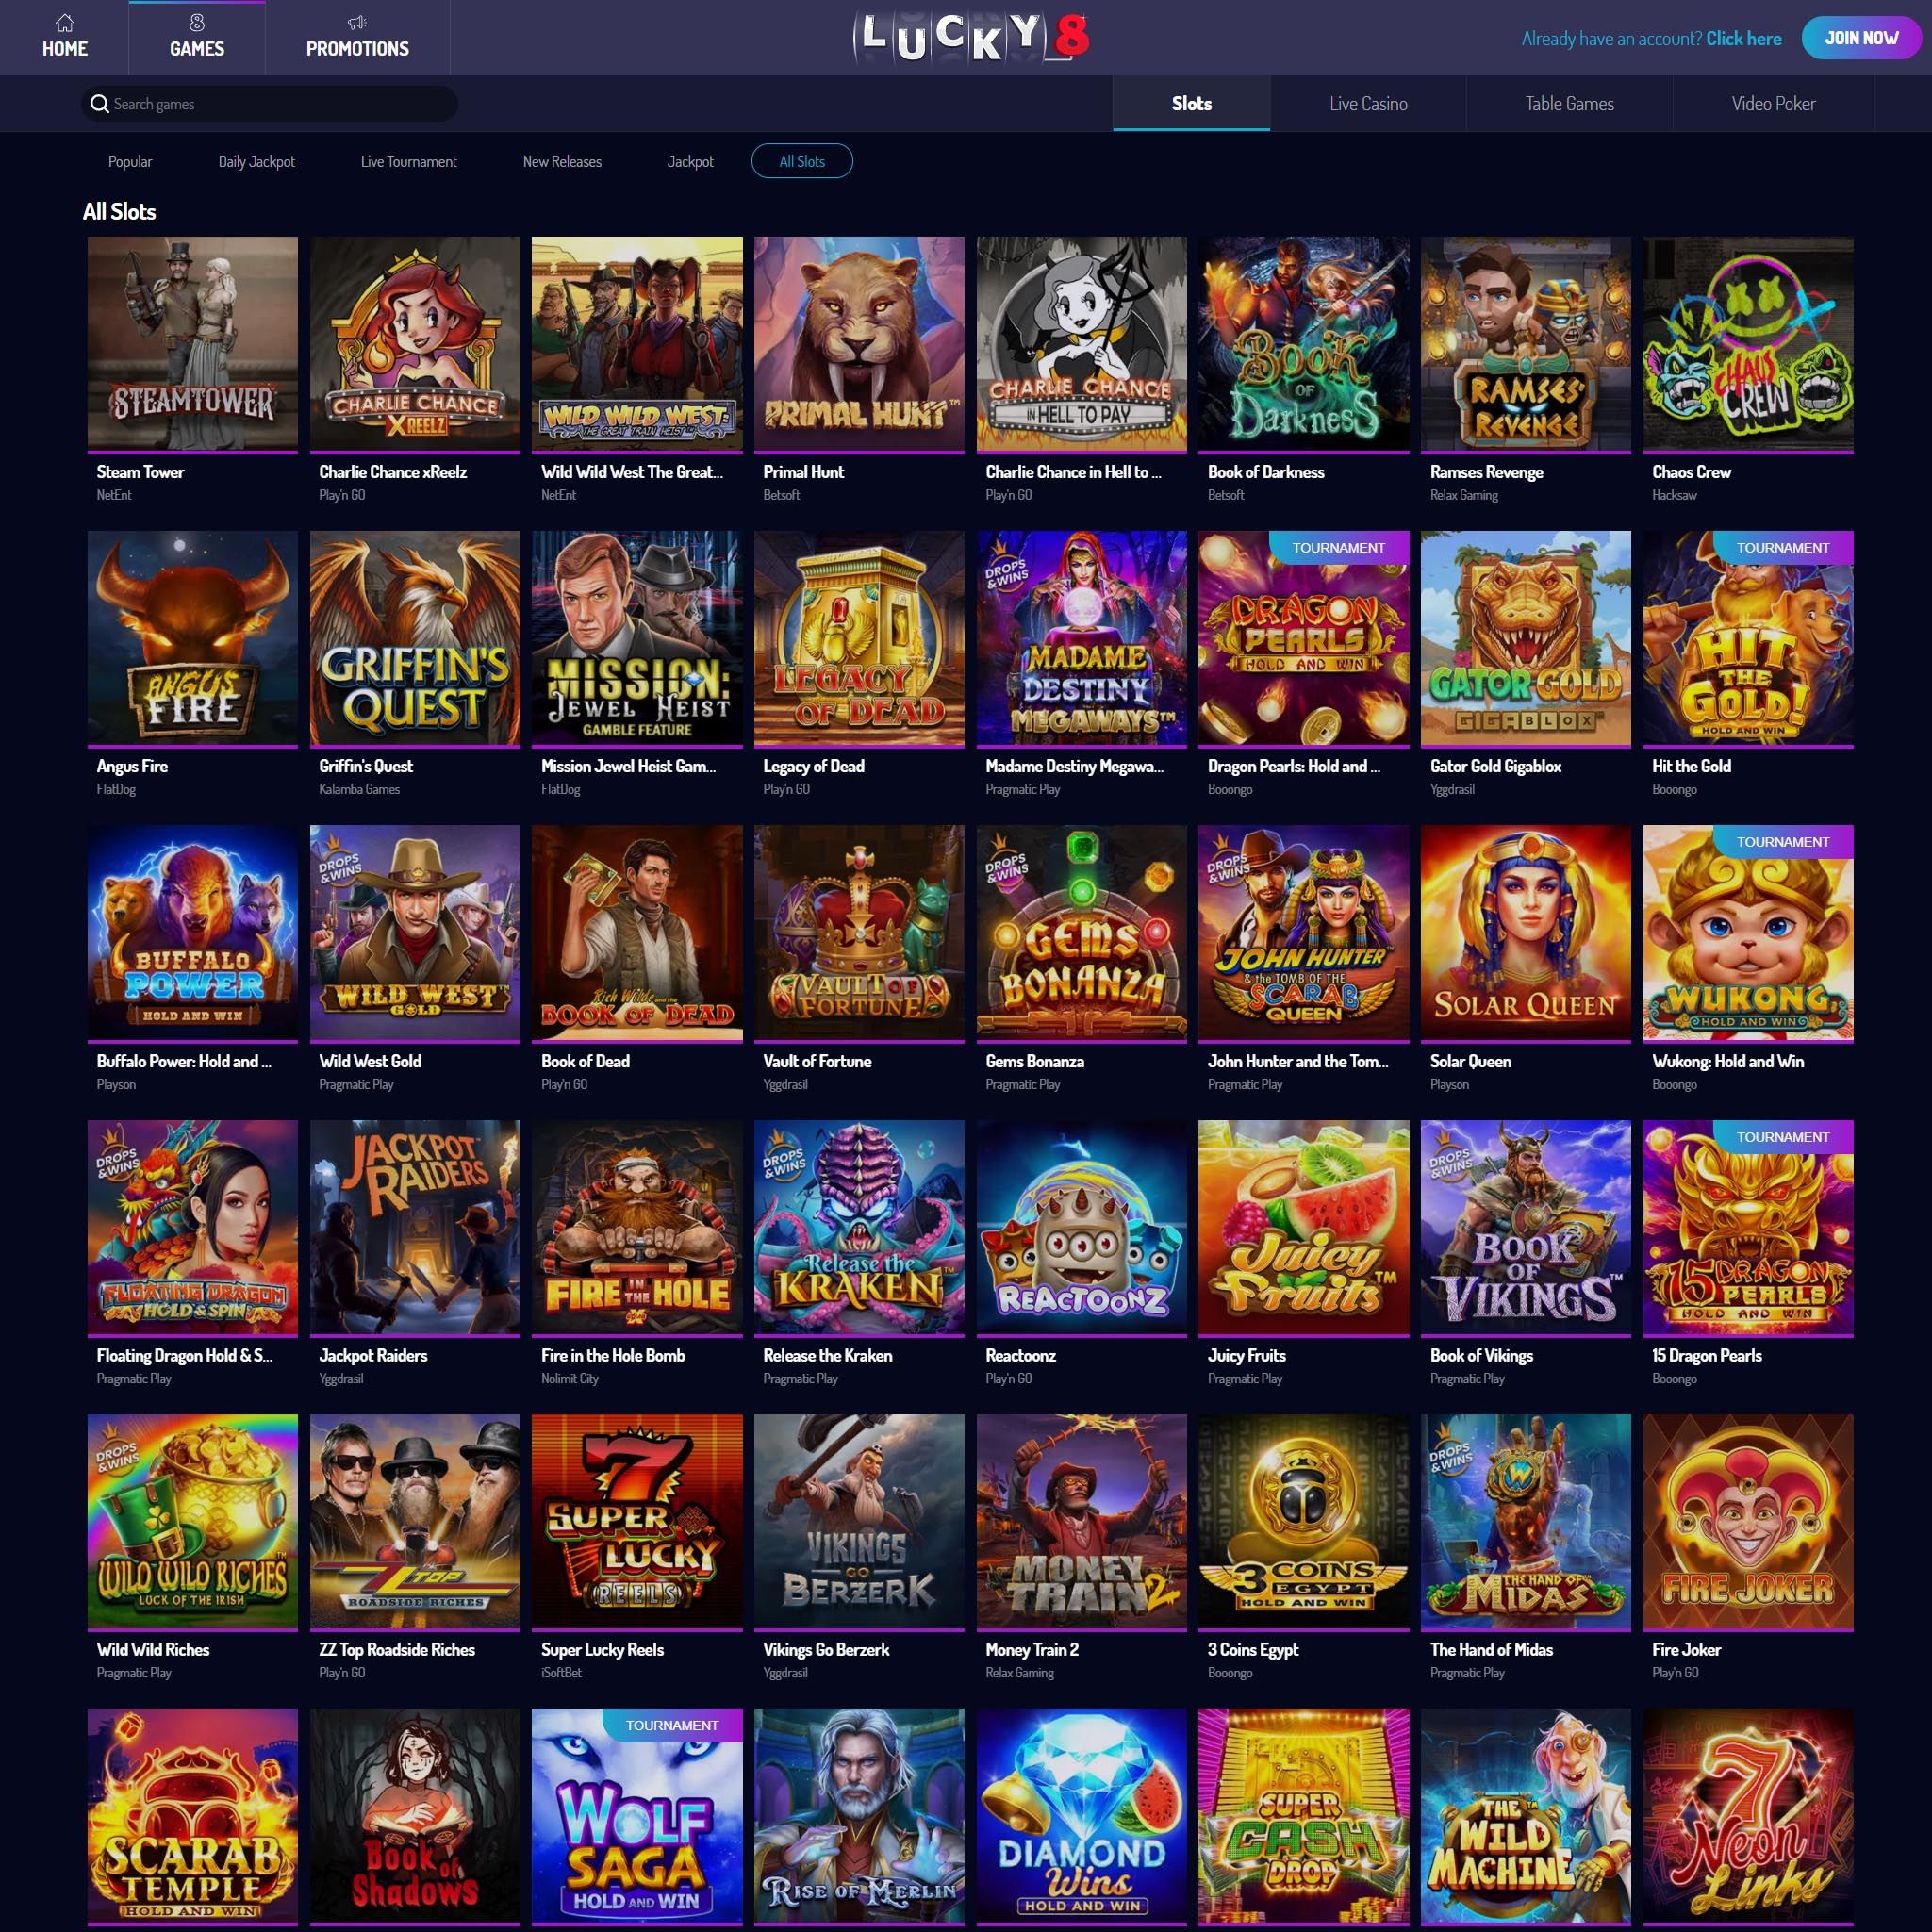 Lucky8 Casino full games catalogue